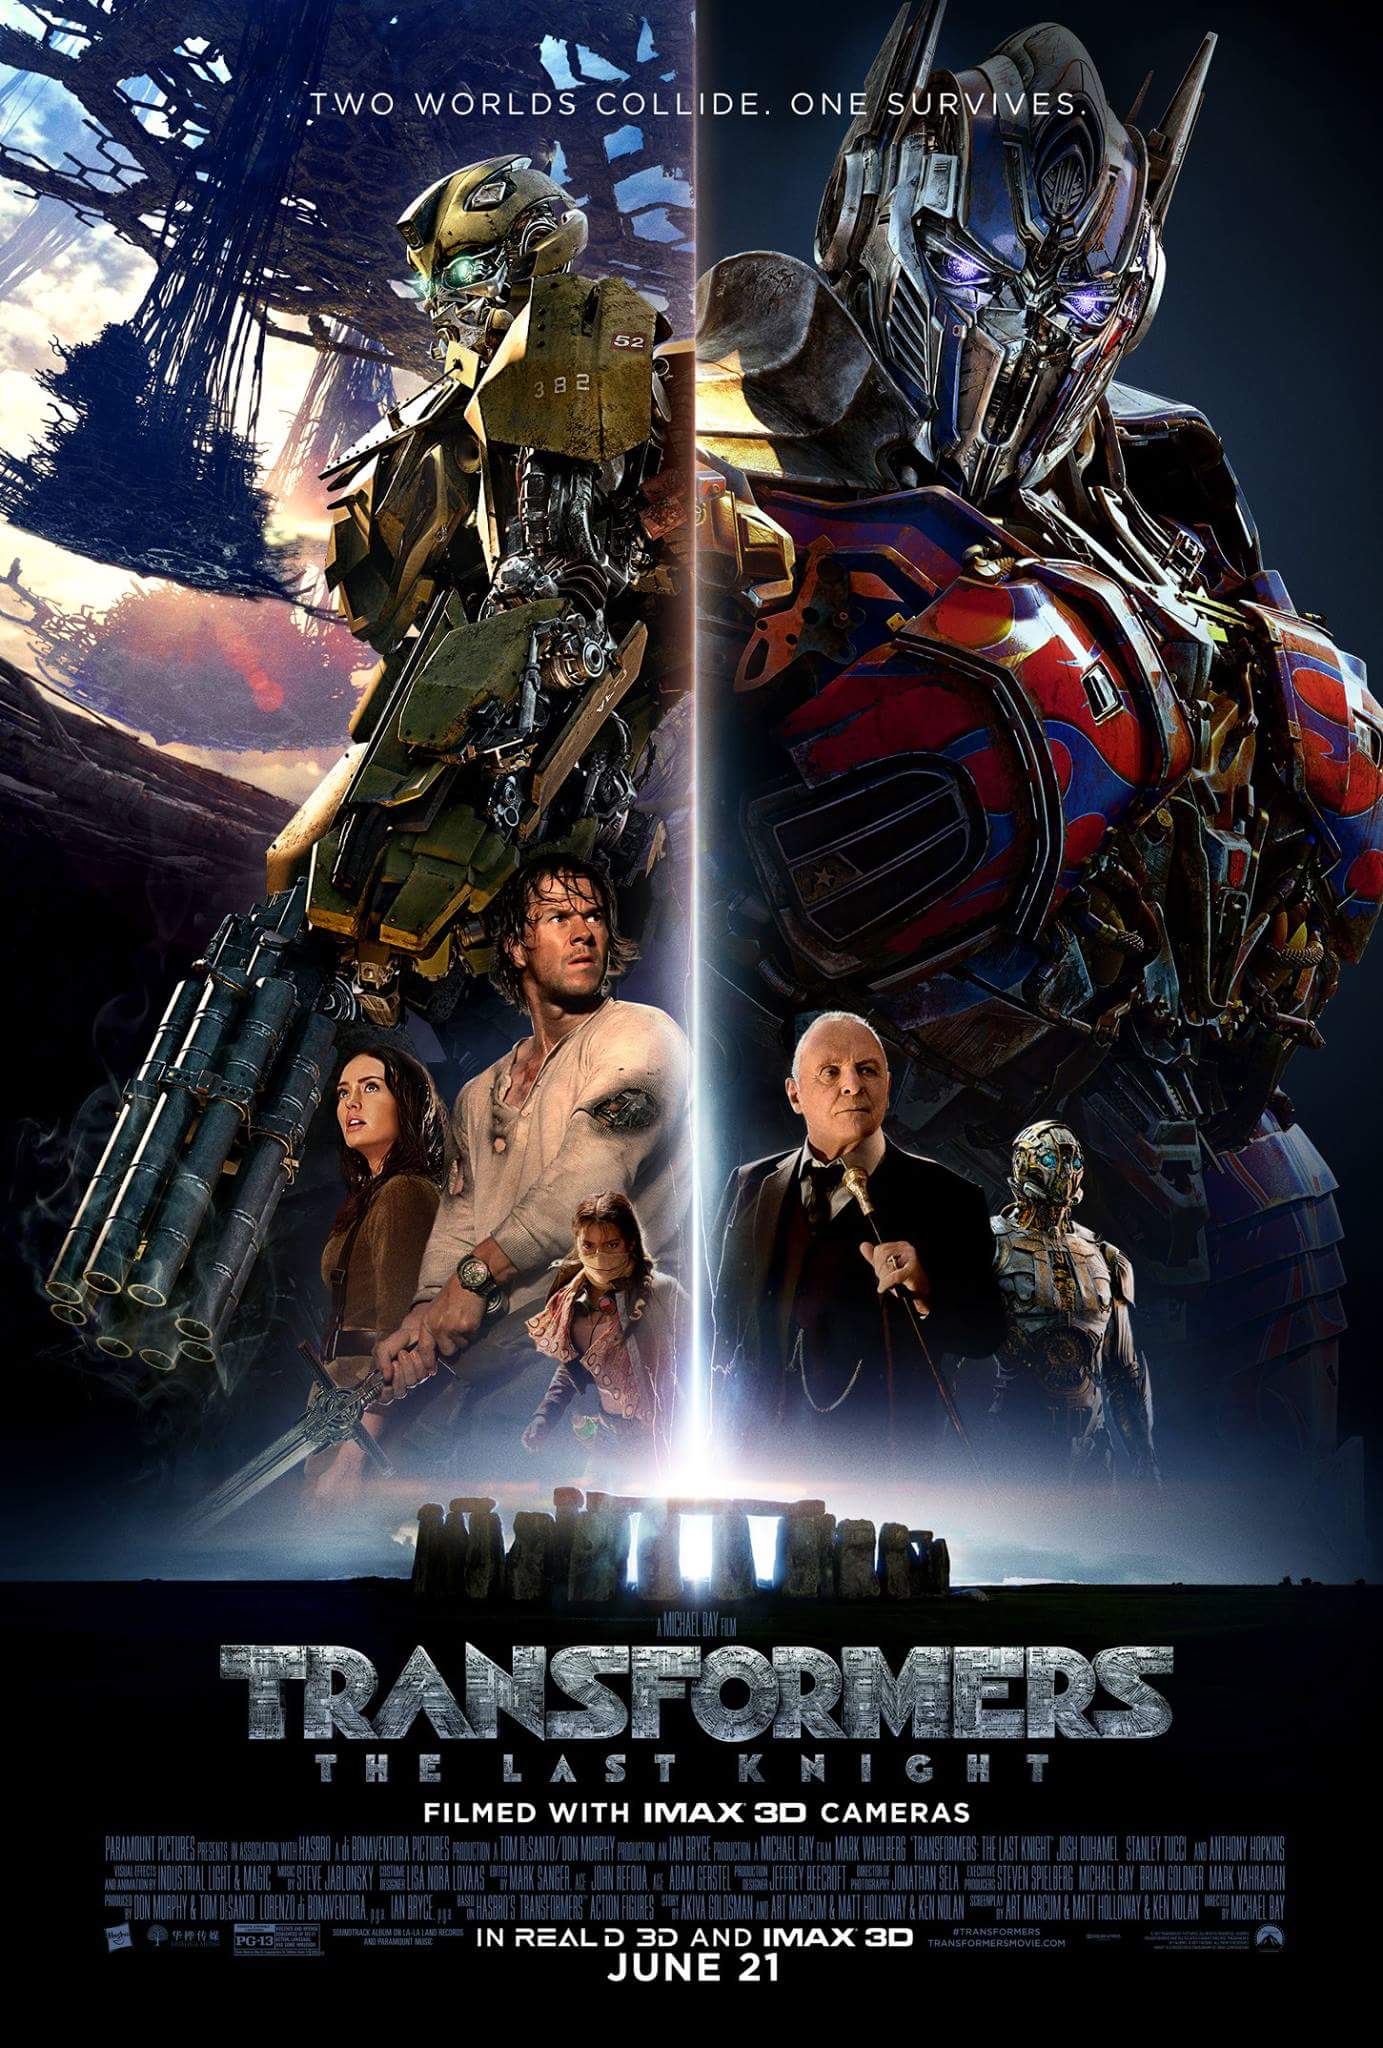 Transformers The Last Knight (2017) ทรานส์ฟอร์เมอร์ส 5 อัศวินรุ่นสุดท้าย Mark Wahlberg